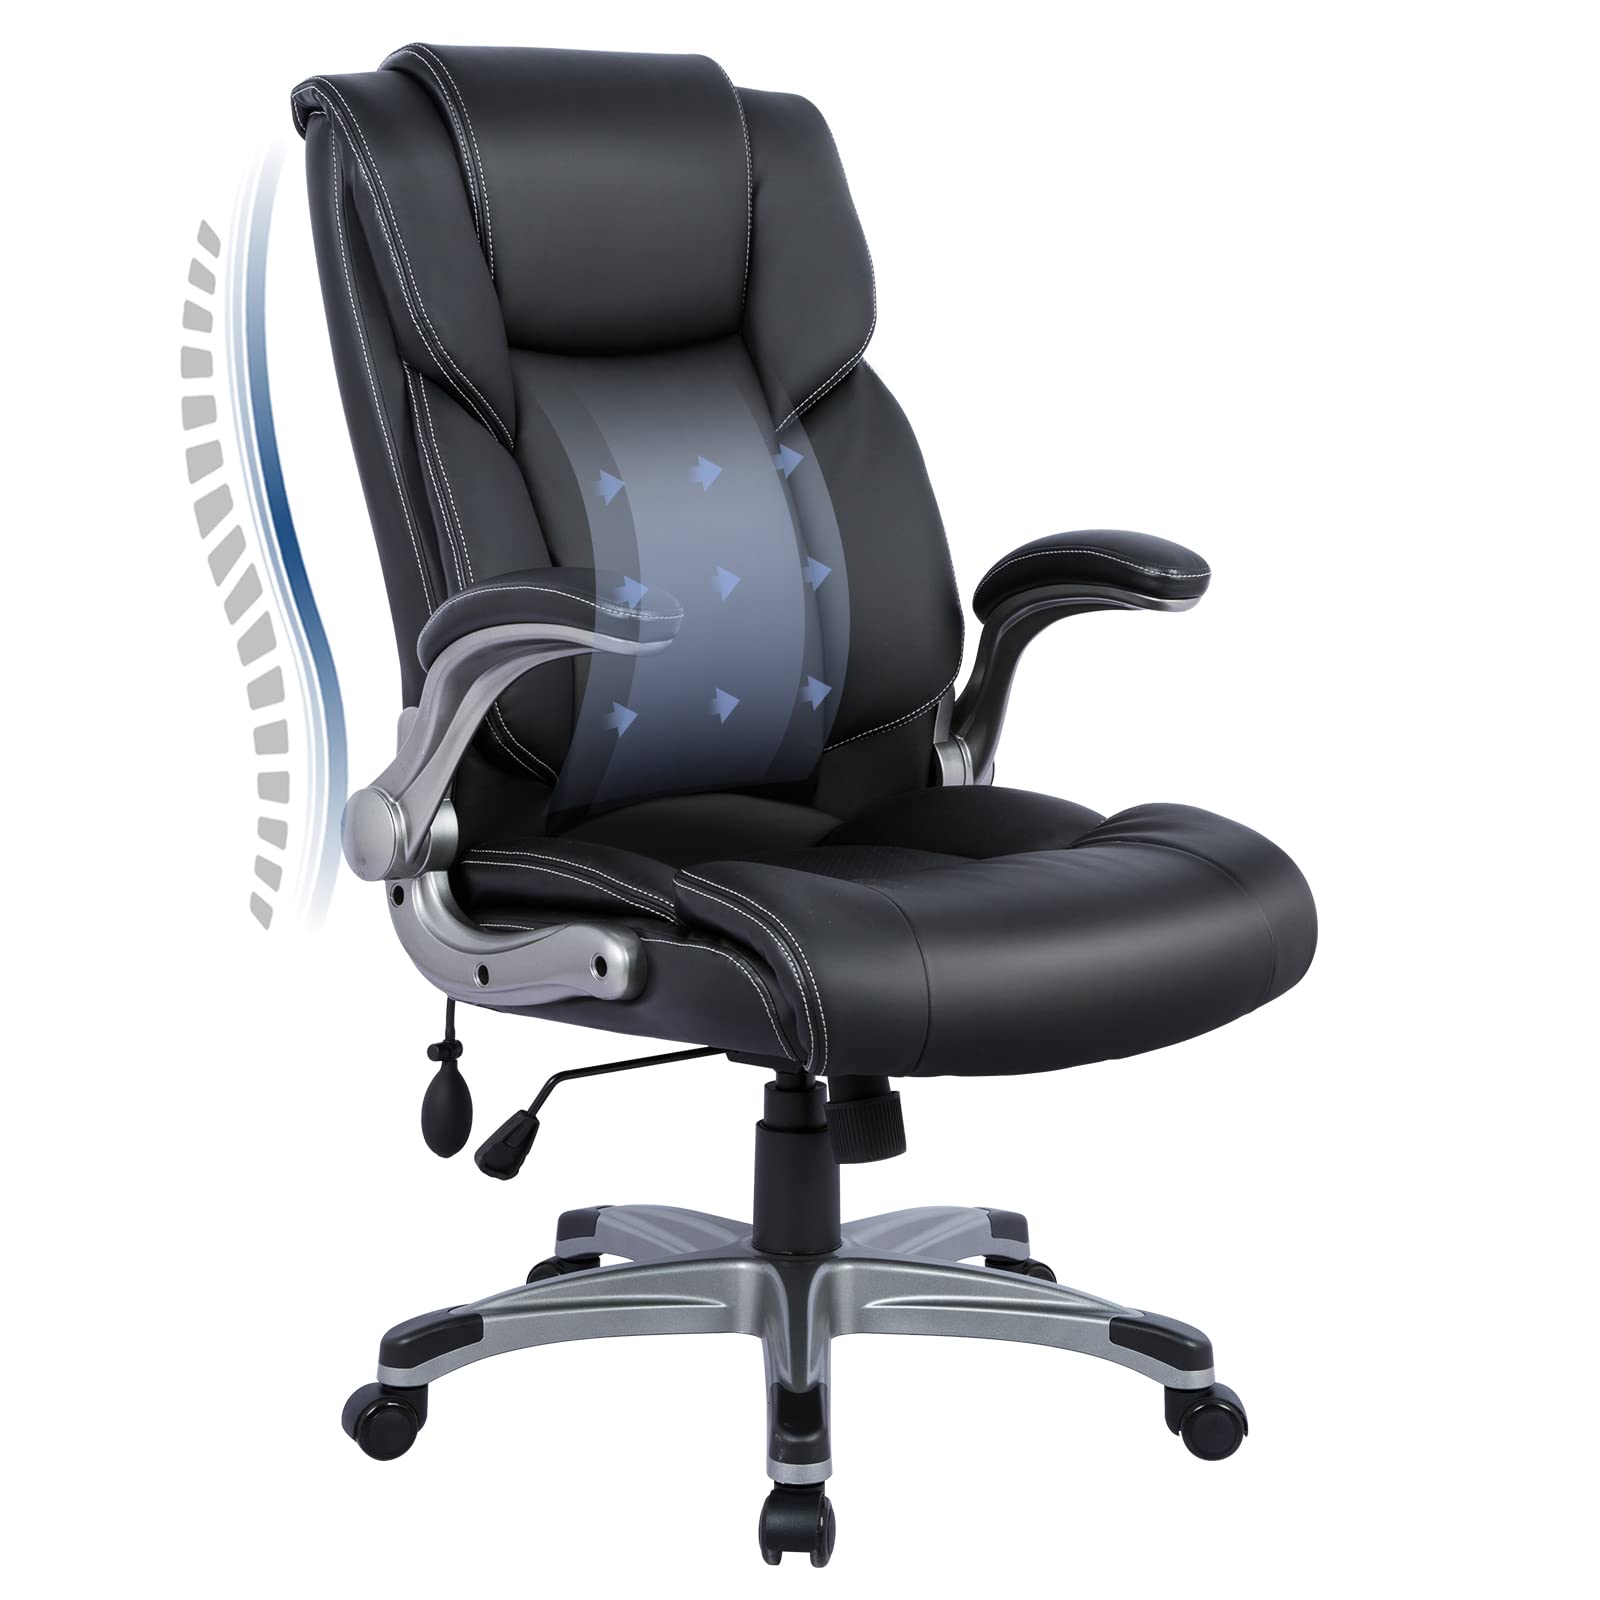 COLAMY كرسي مكتب تنفيذي عالي الظهر - كرسي جلدي مريح للمكتب المنزلي للكمبيوتر